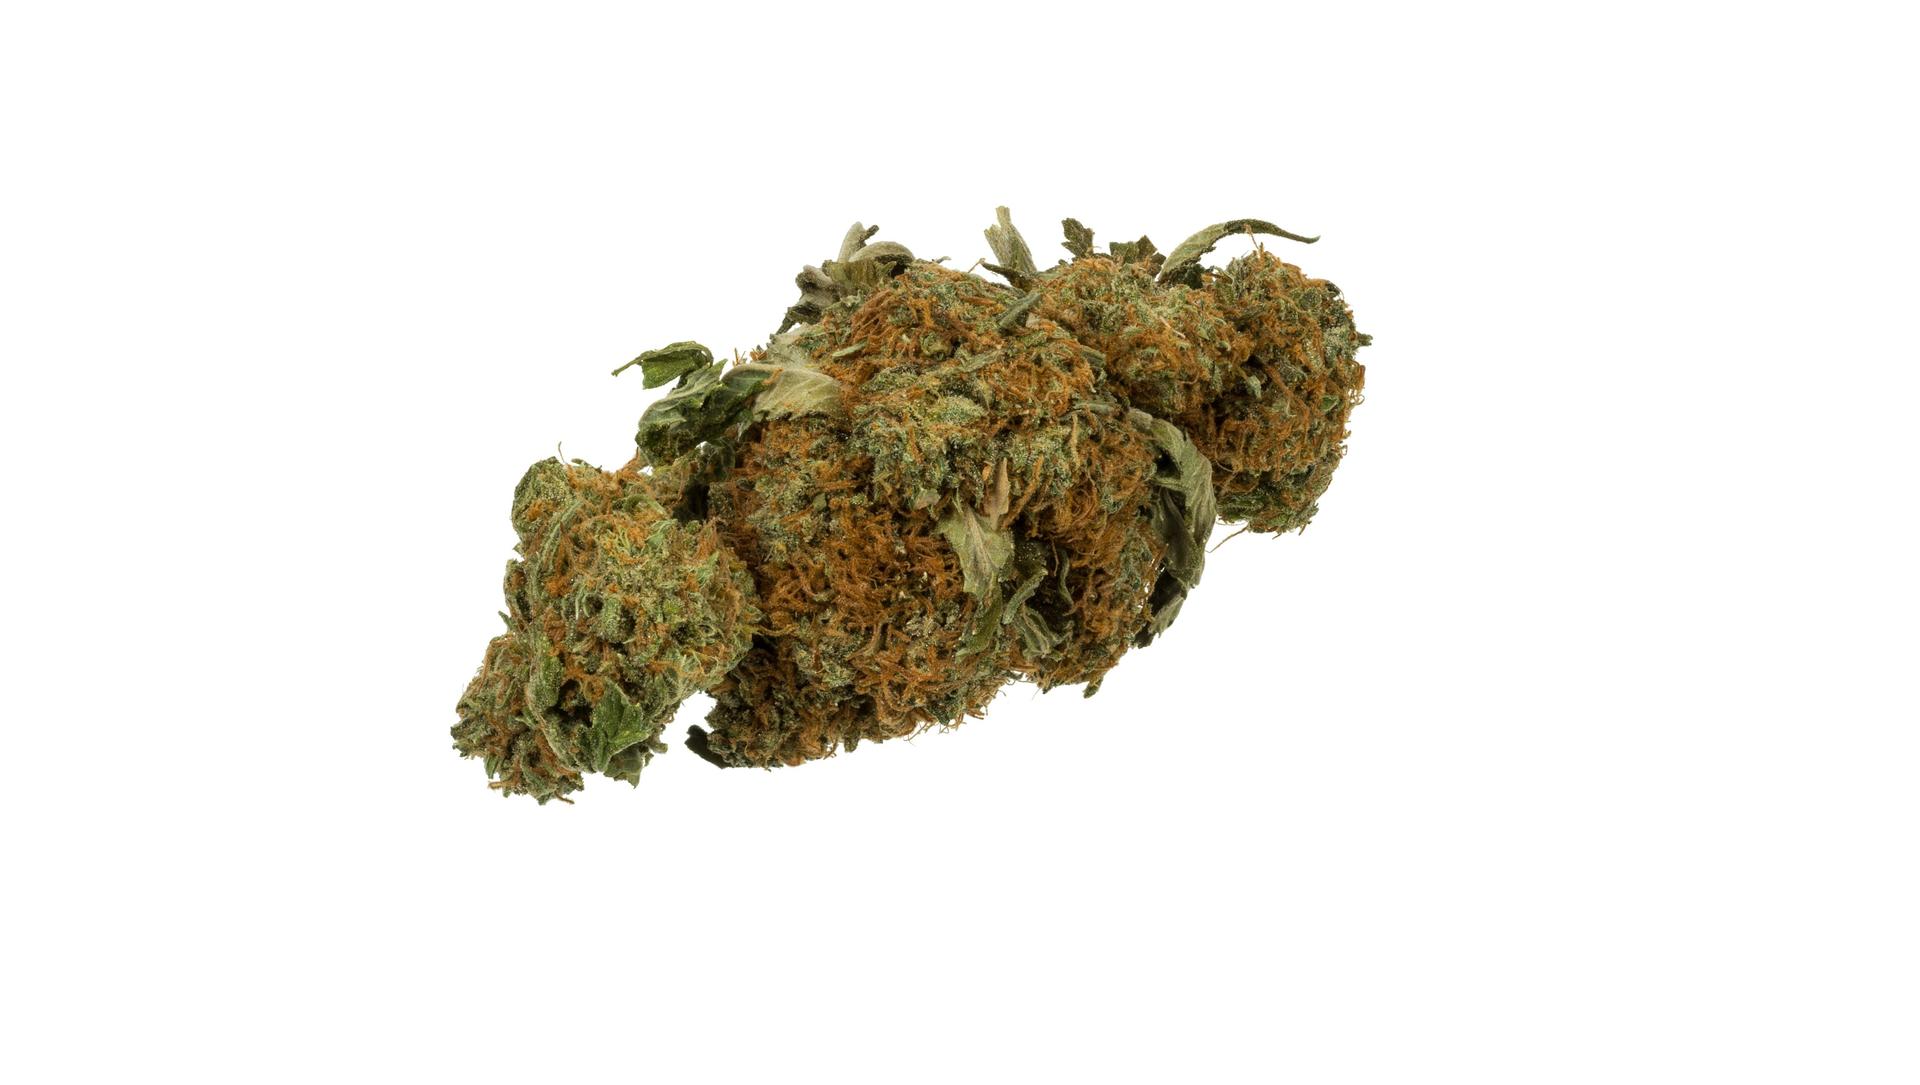 Dried cannabis bud